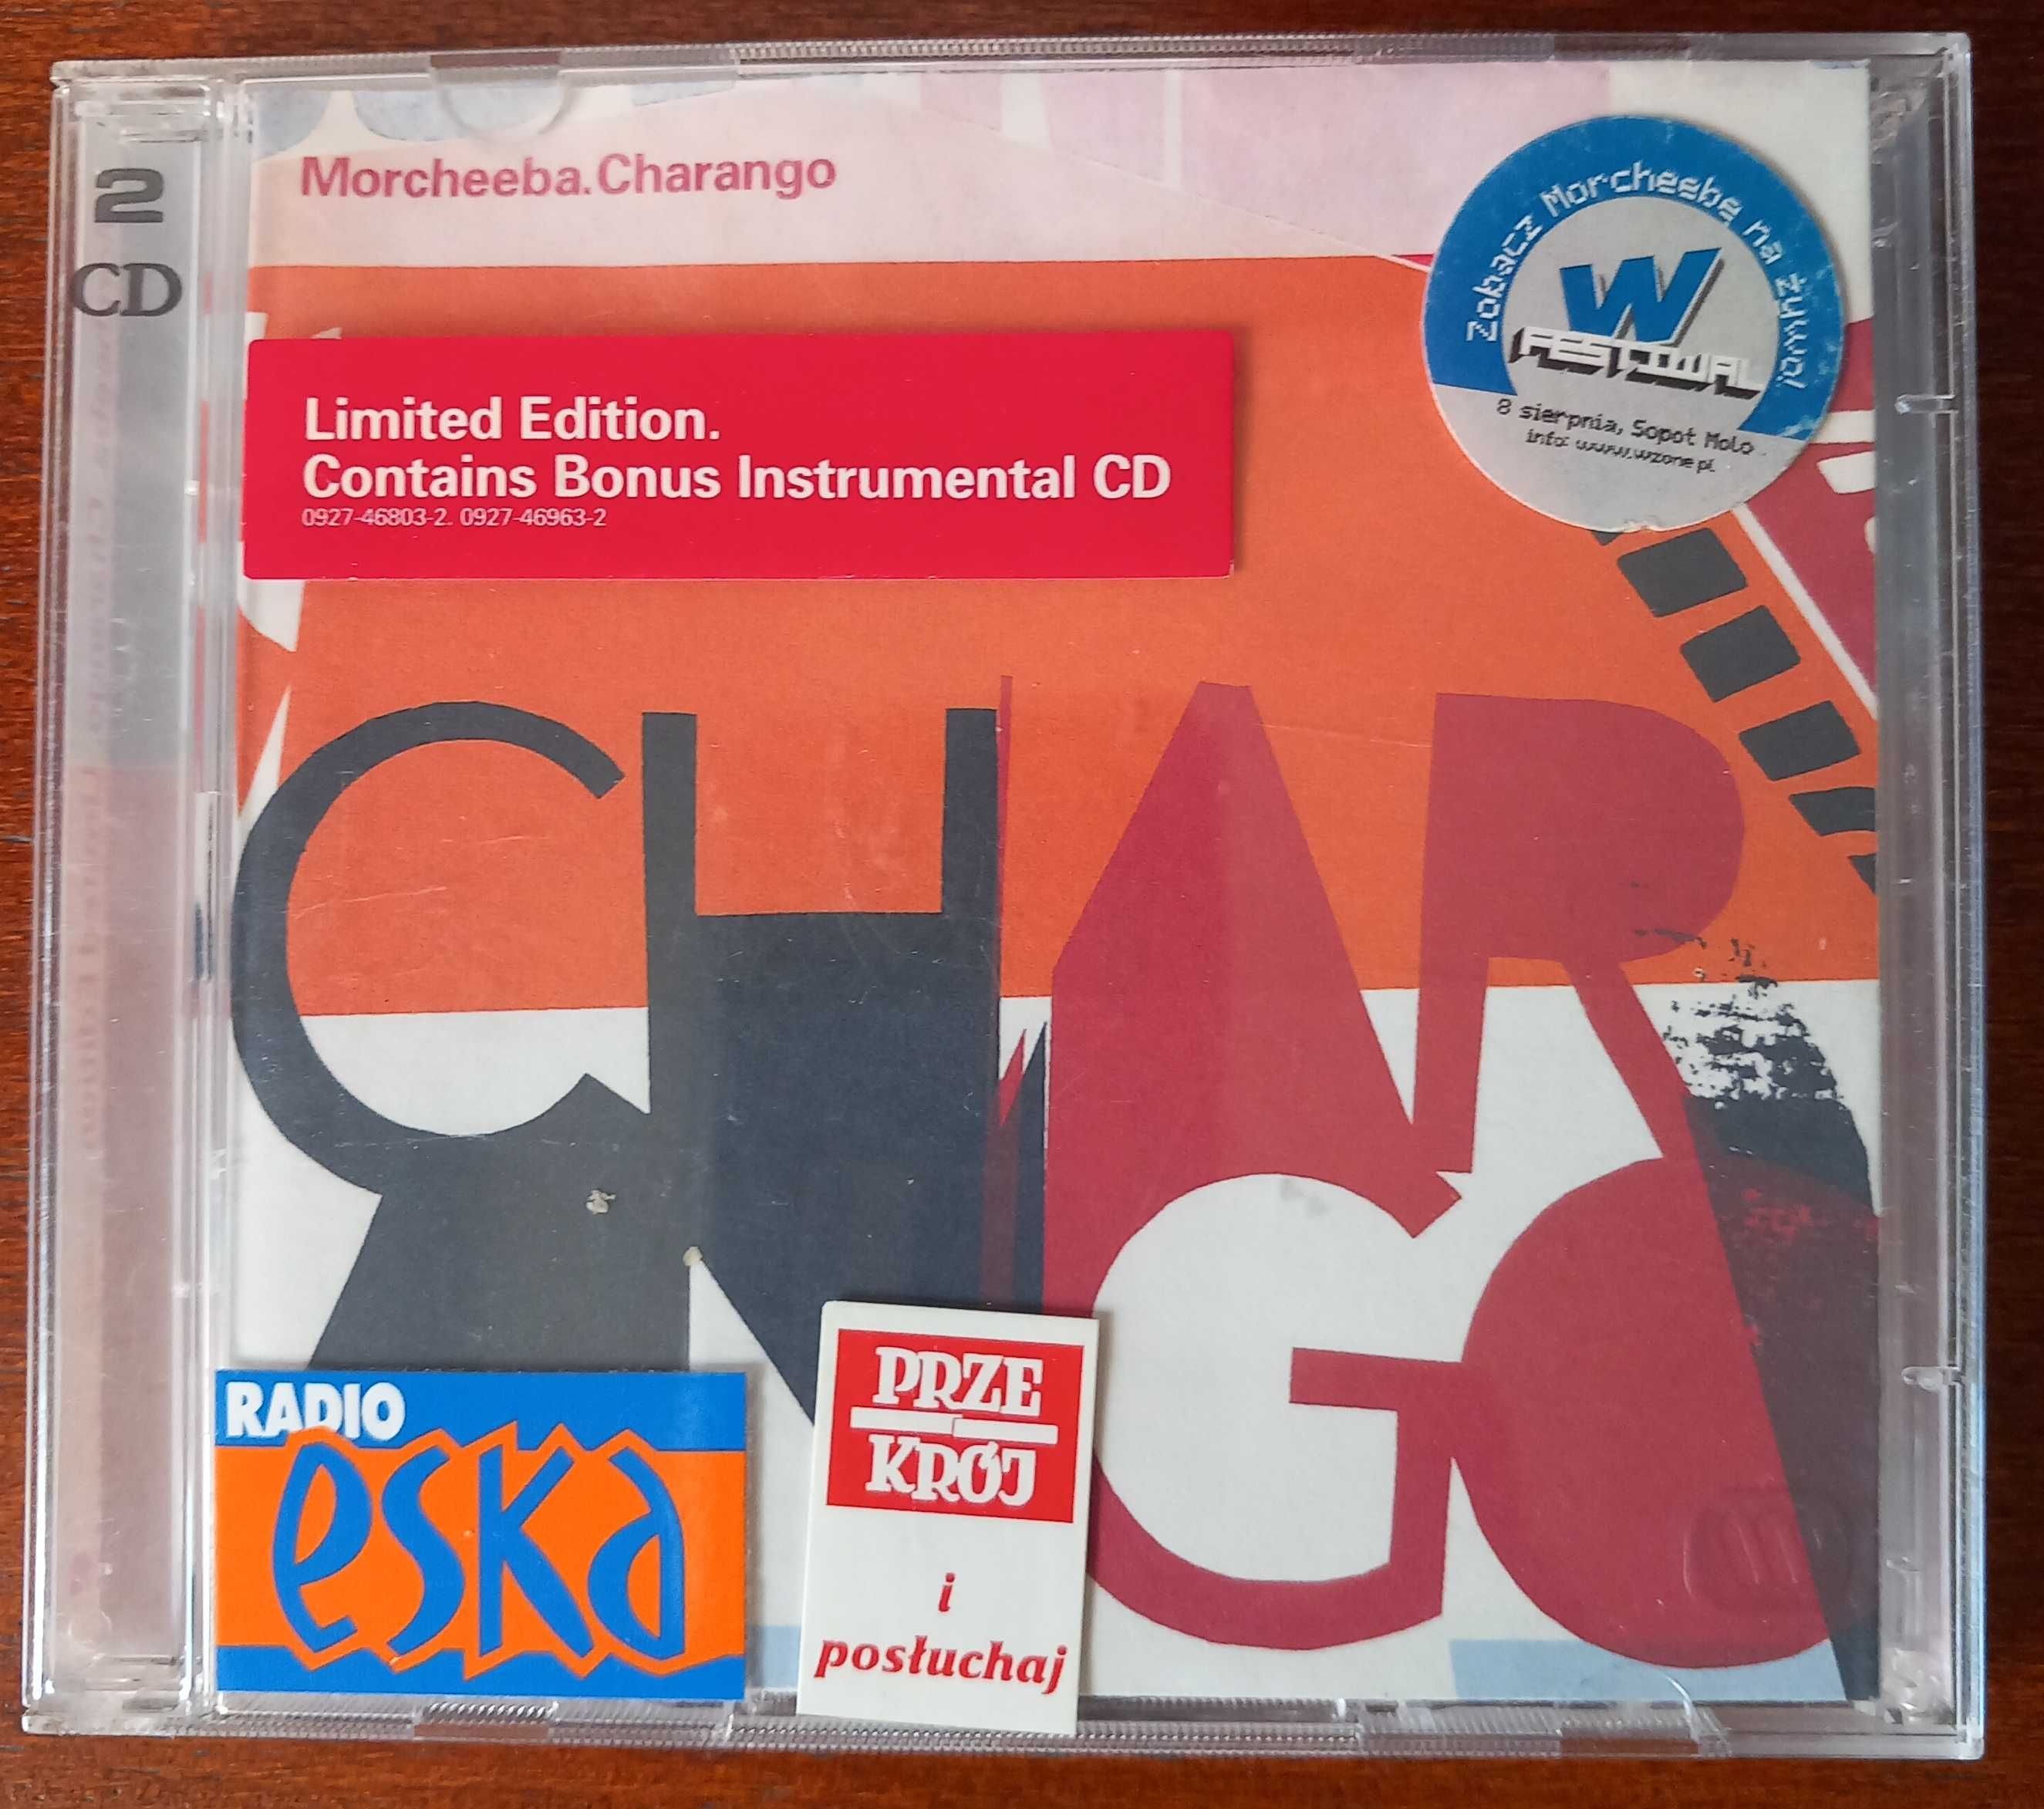 Morcheeba Charango limited edition 2 CD